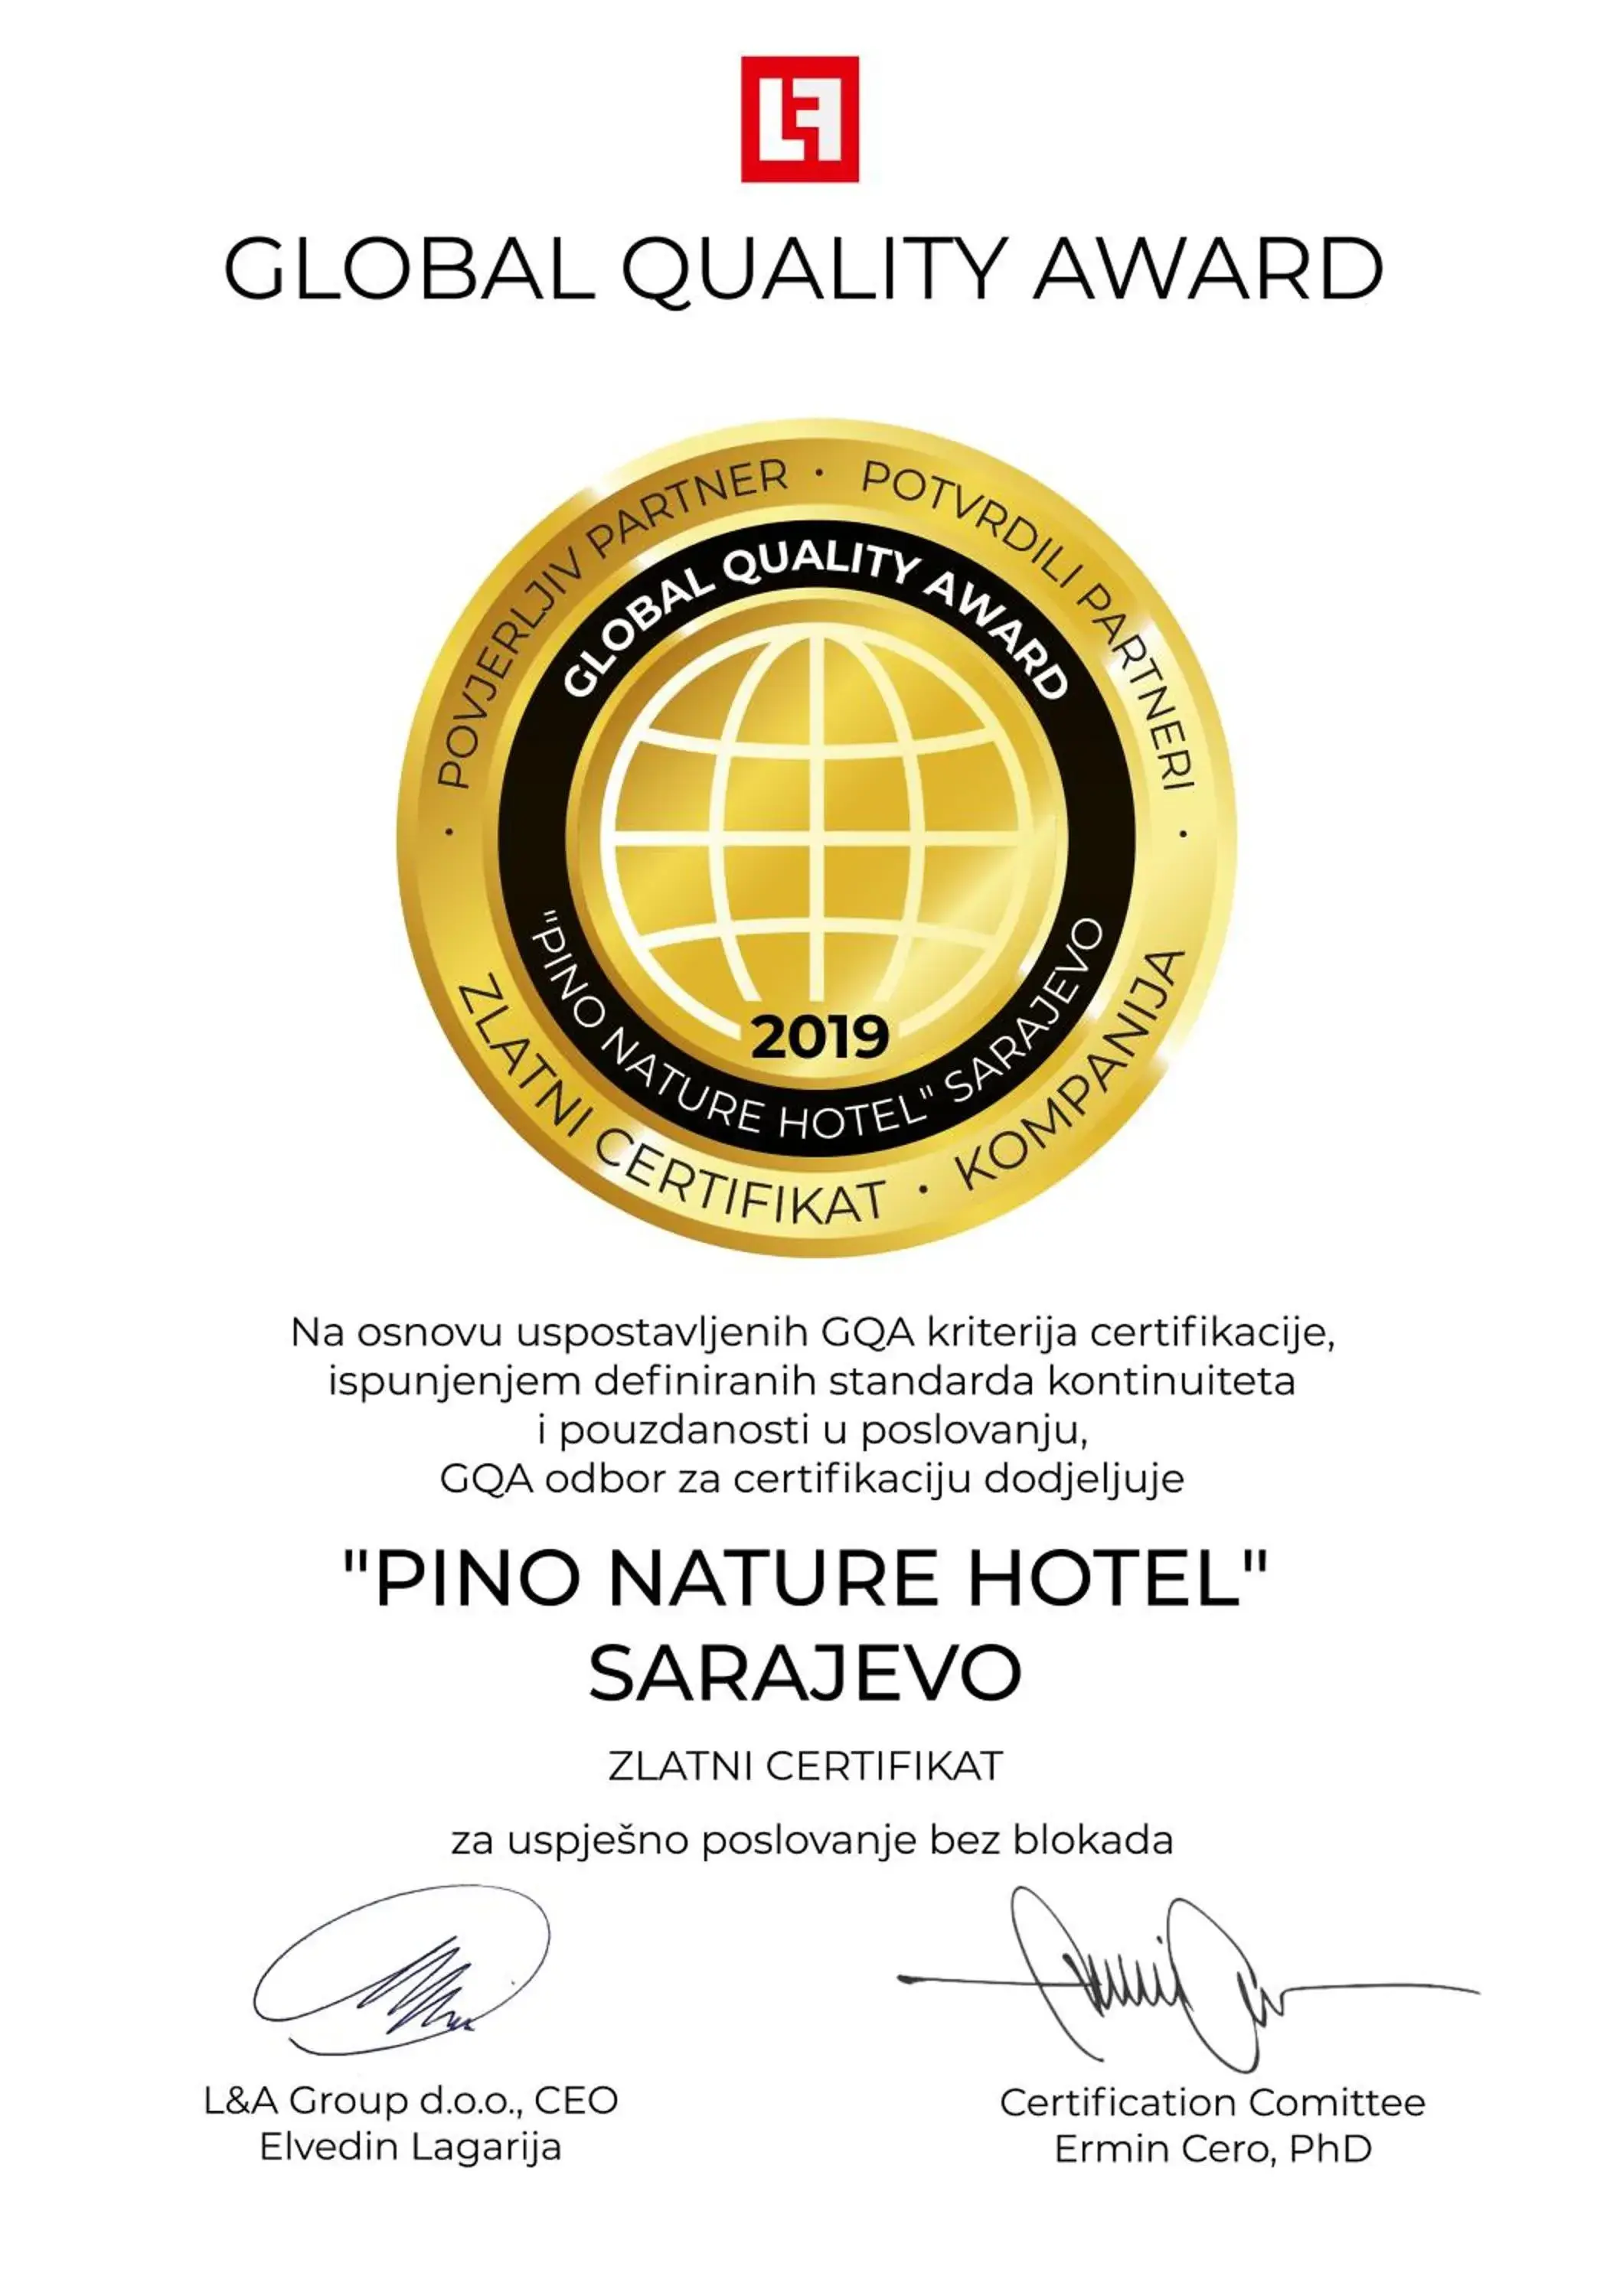 Certificate/Award in Pino Nature Hotel